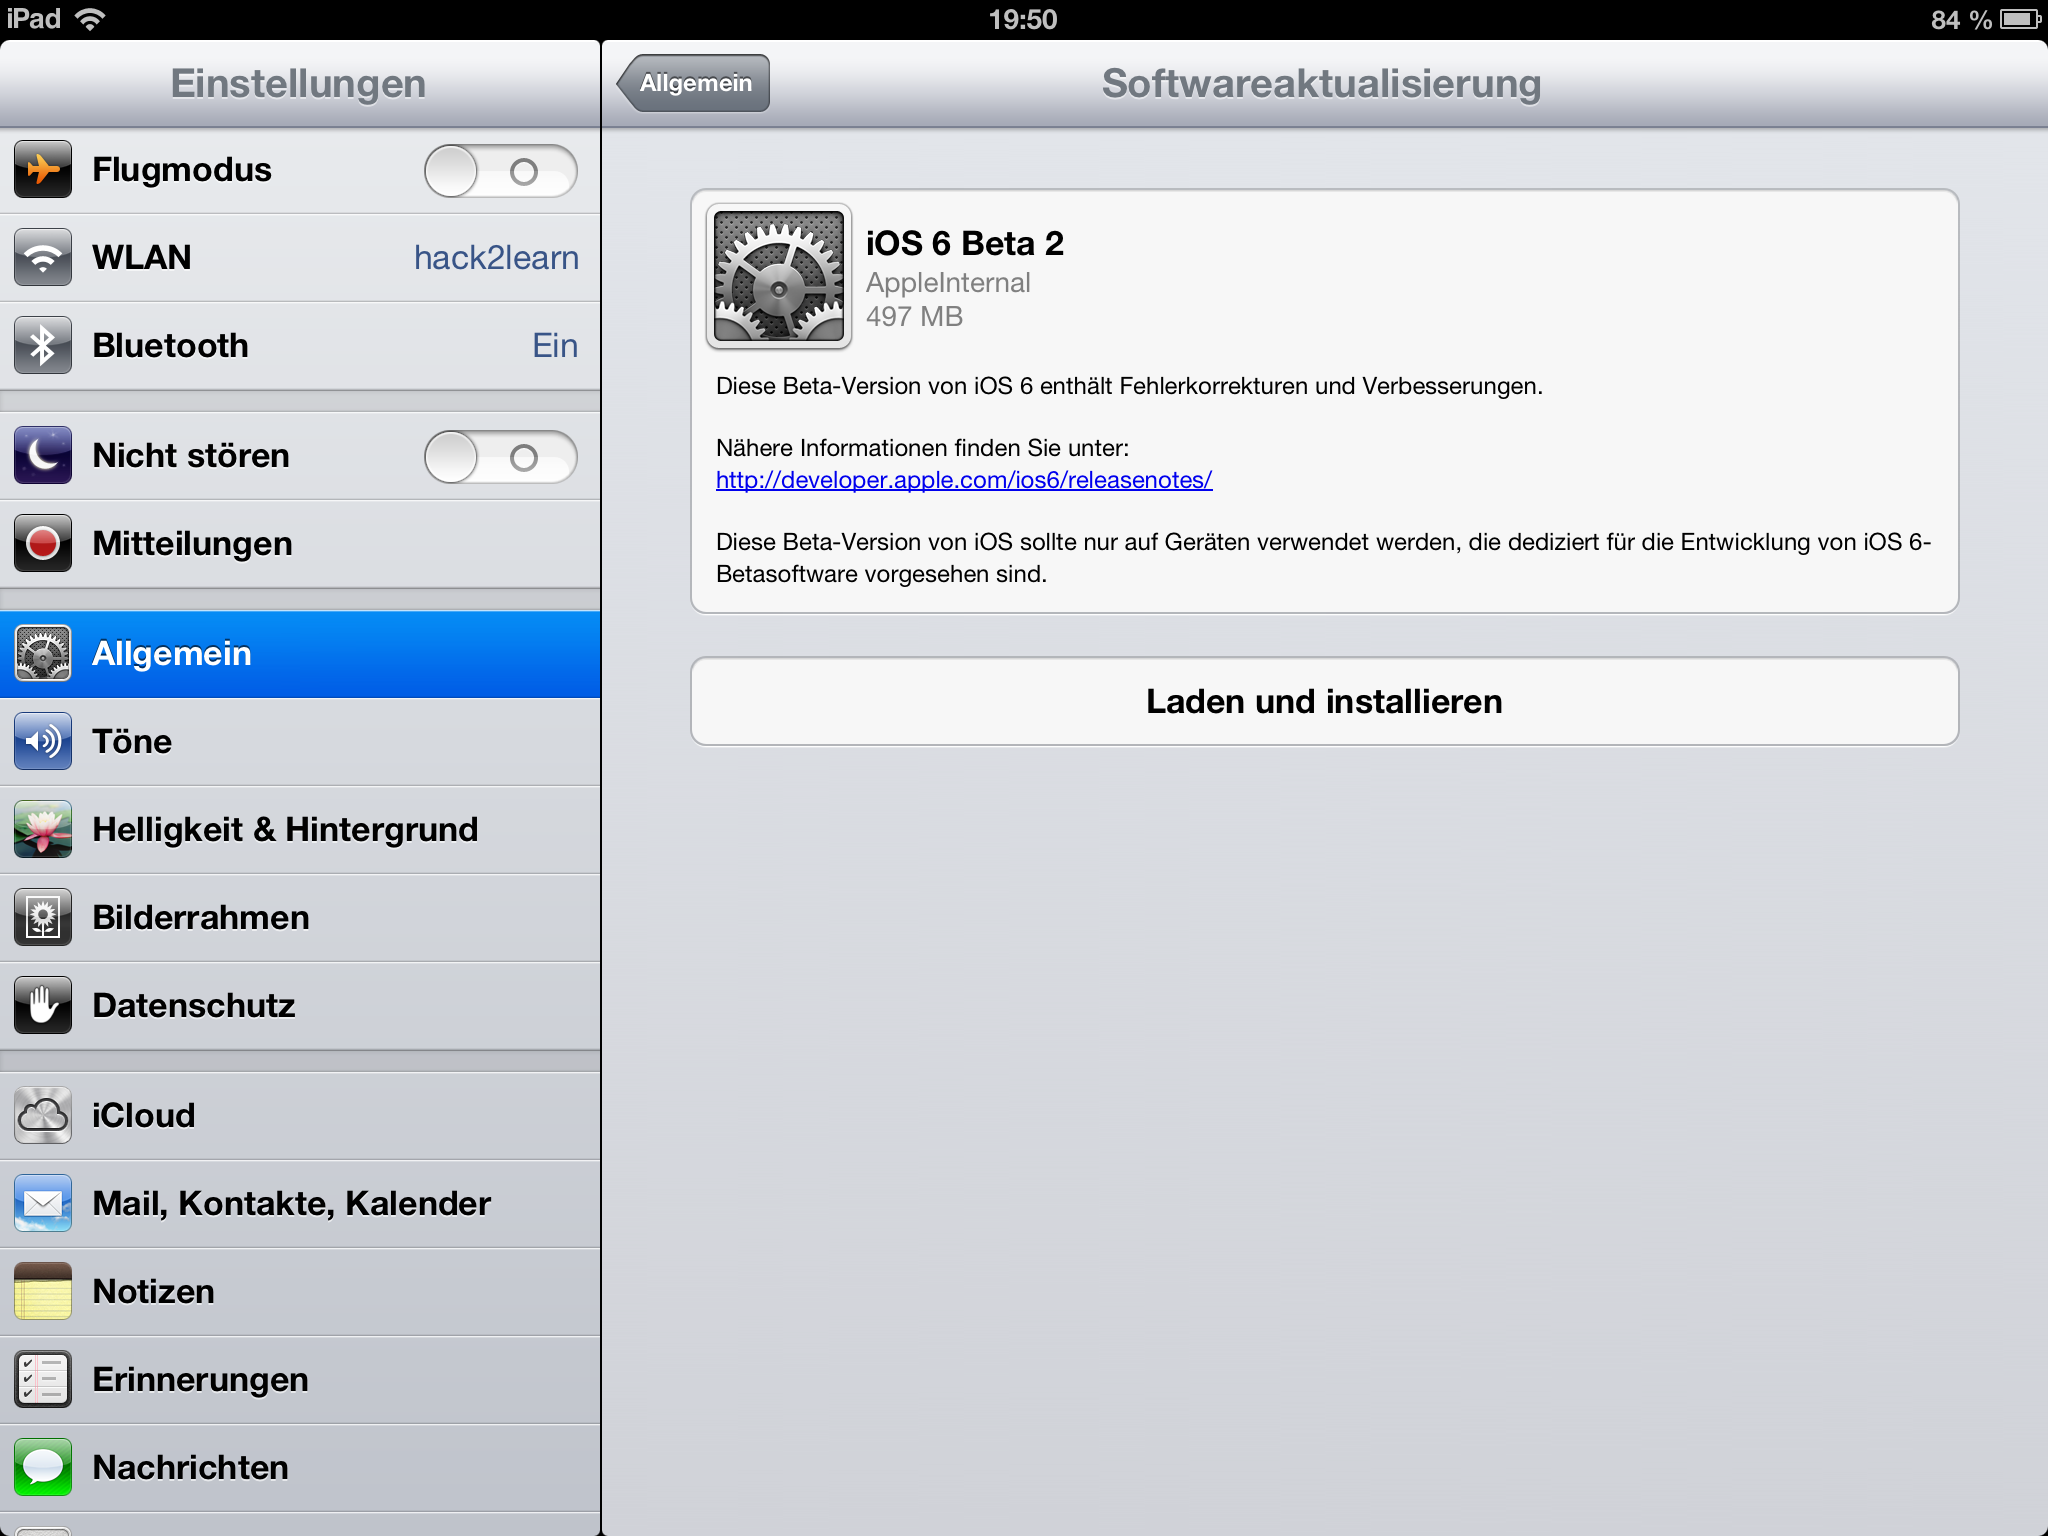 iOS 6.0 Beta 2 erschienen / hack2learn